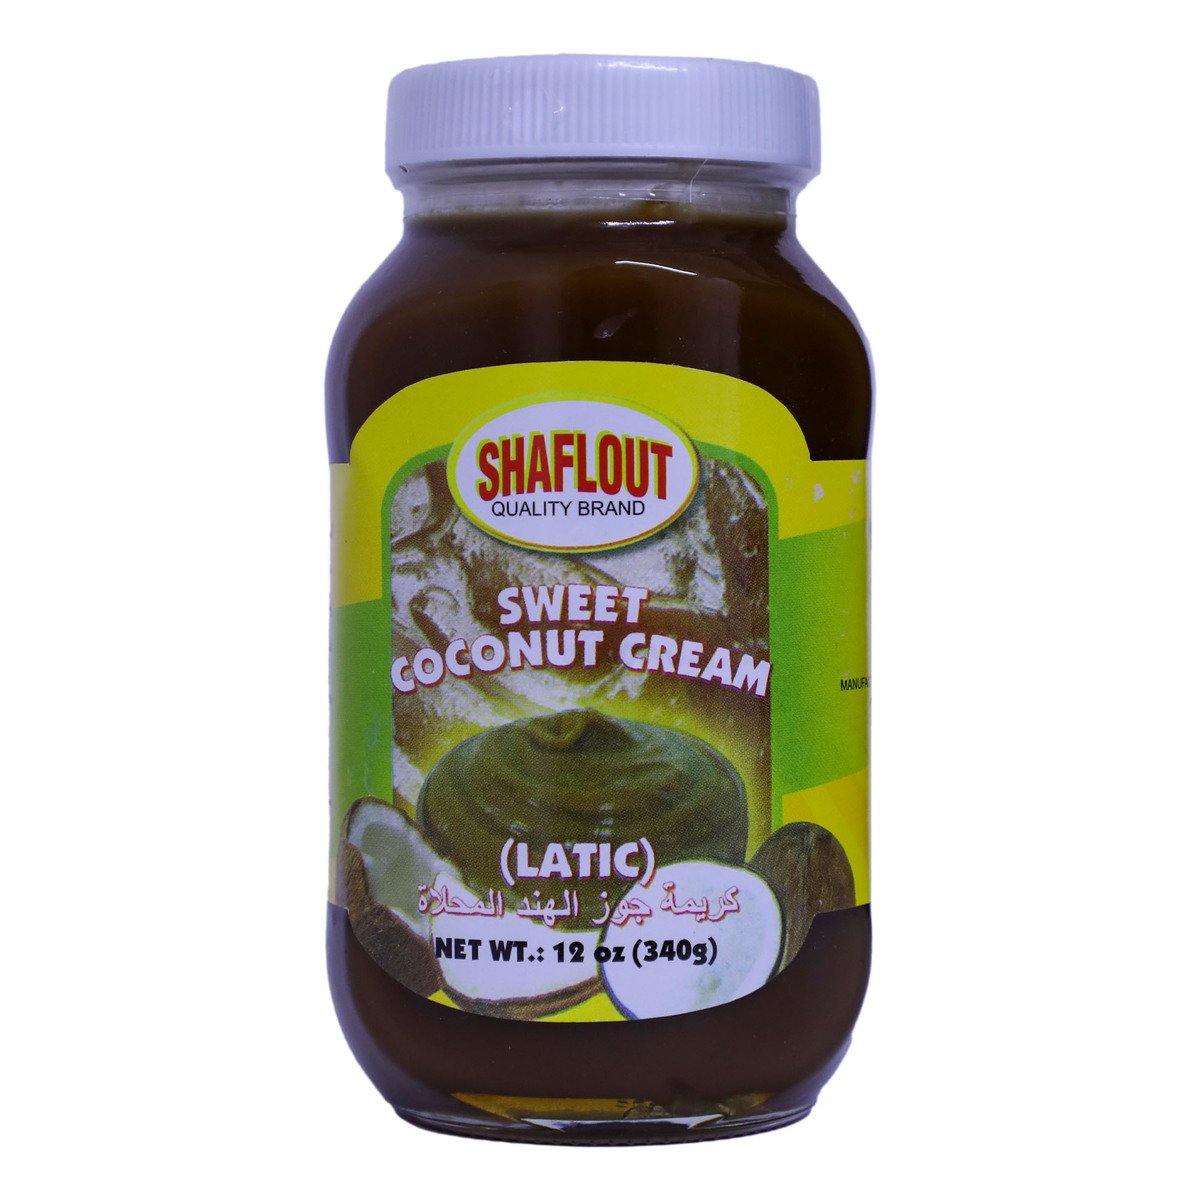 Shaflout Sweet Coconut Cream (Latic) 340g